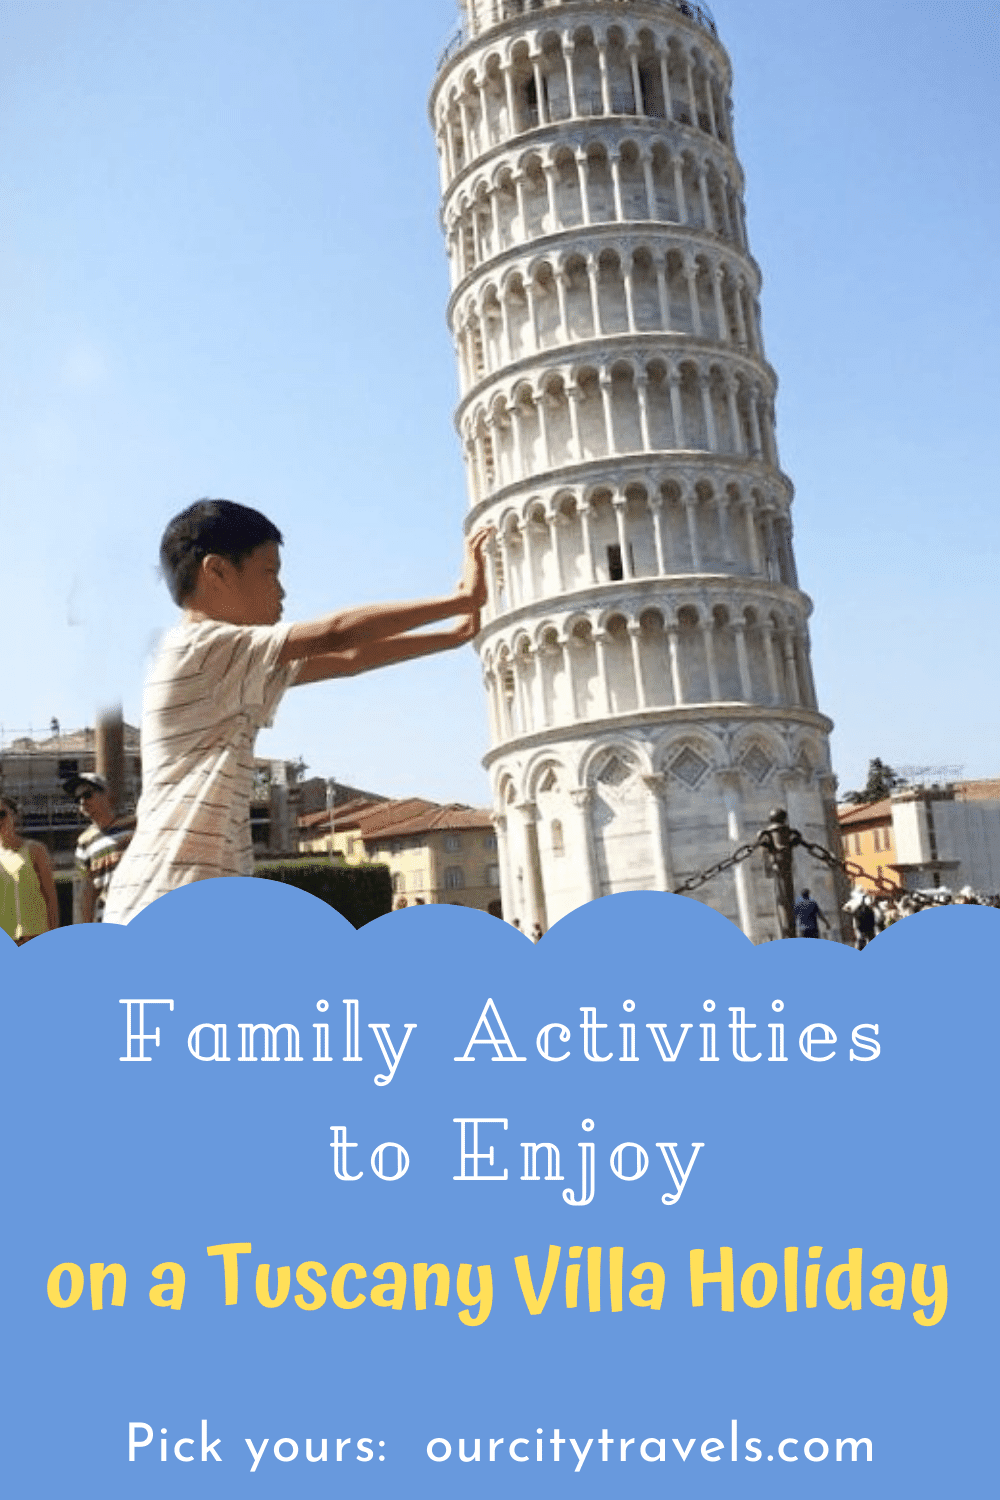 Family Activities to Enjoy on a Tuscany Villa Holiday pin image